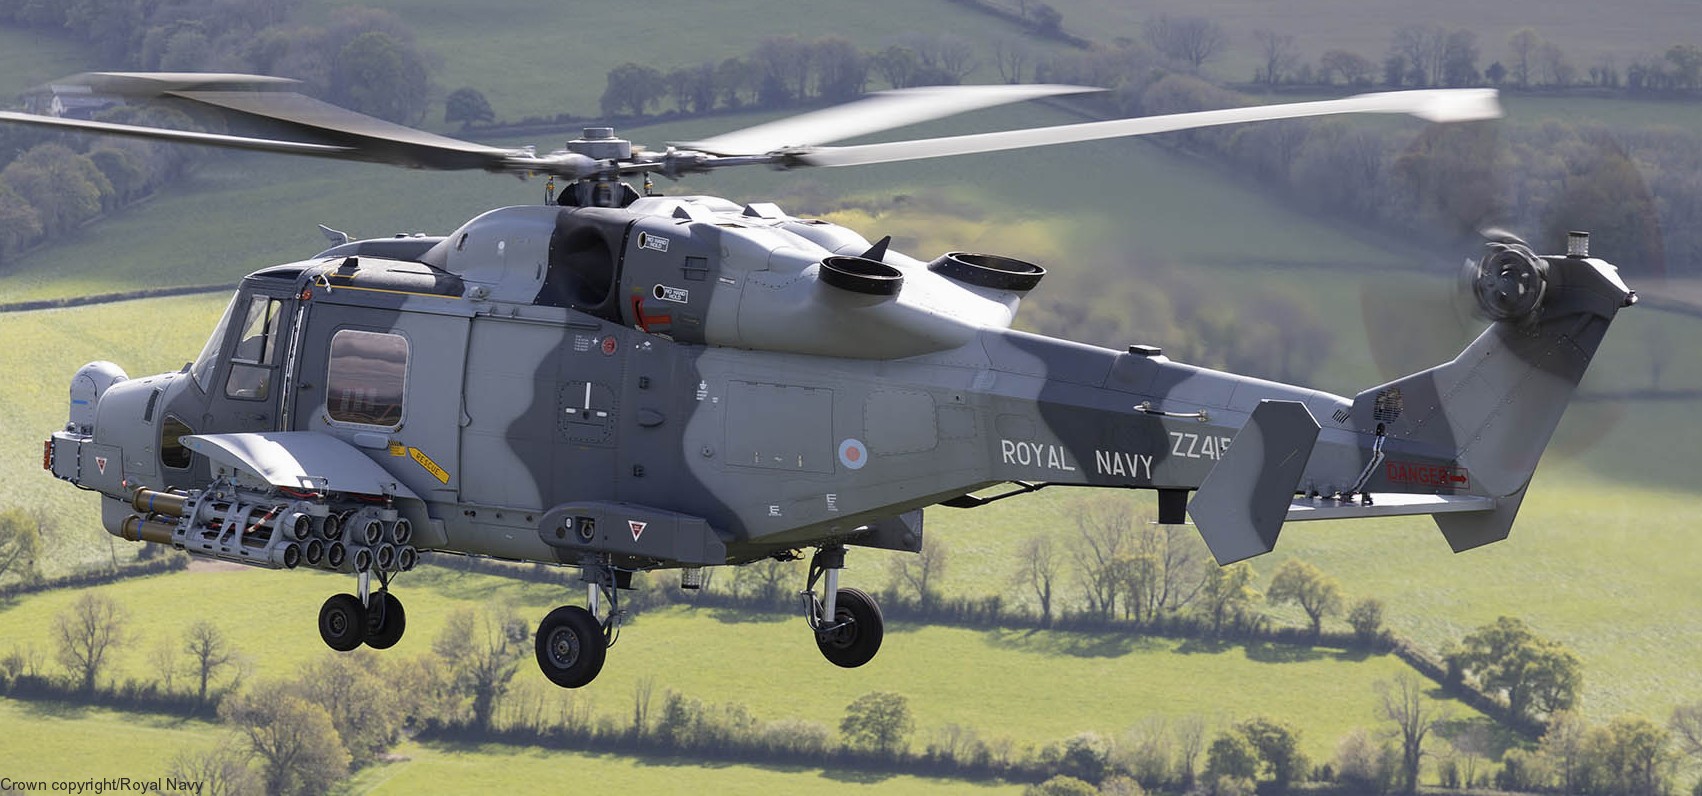 martlet lmm lightweight multirole missile royal navy thales wildcat hma2 helicopter 14